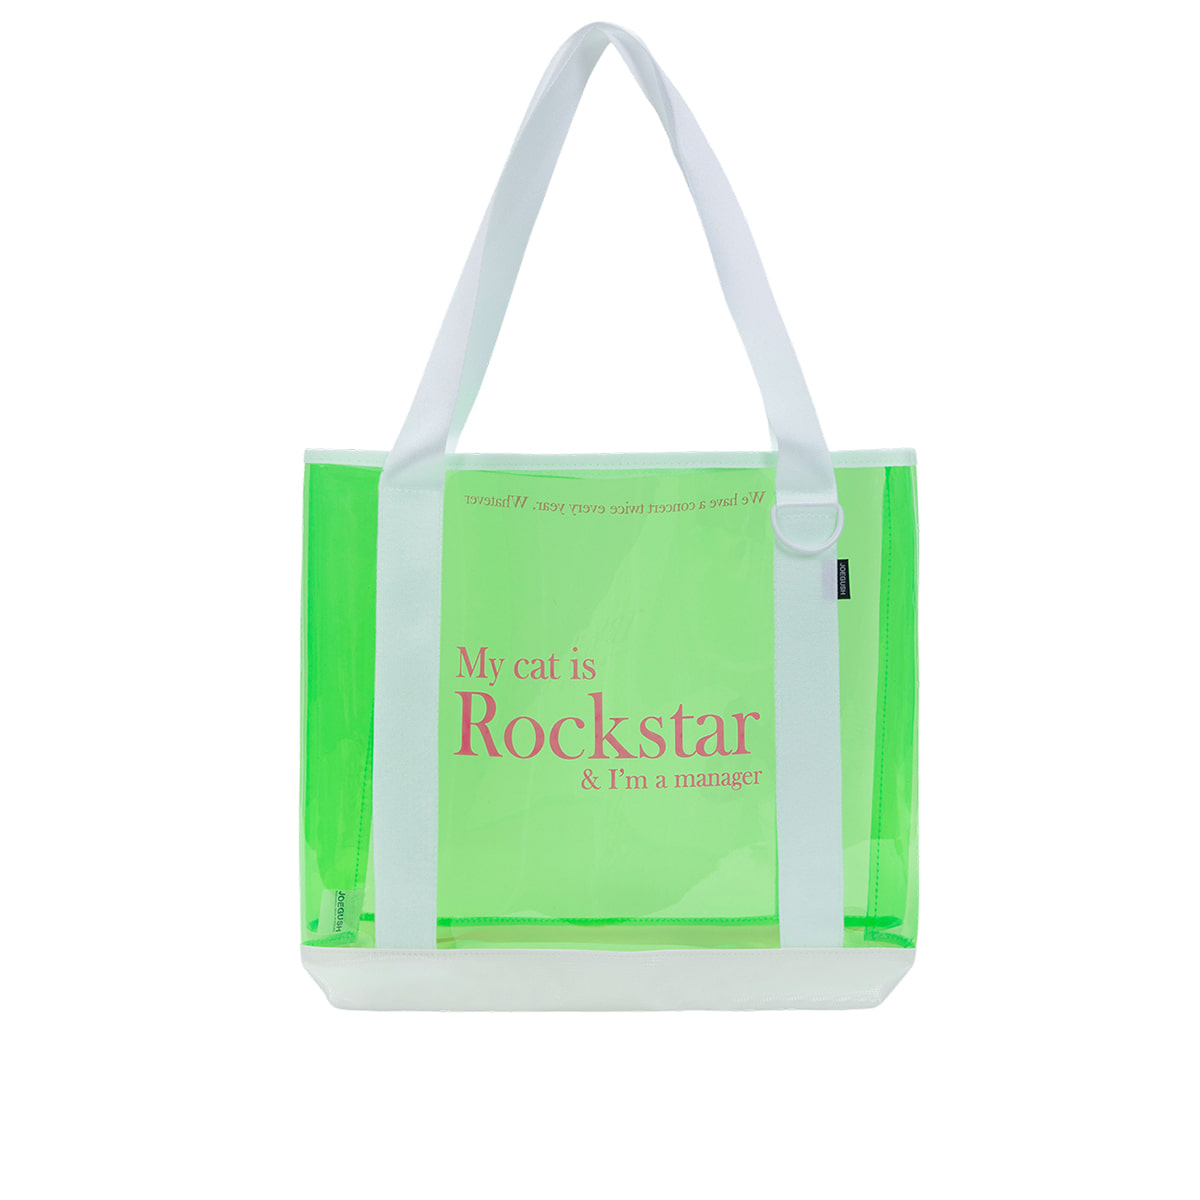 Rockstar pvc tote bag (Green/Pink)